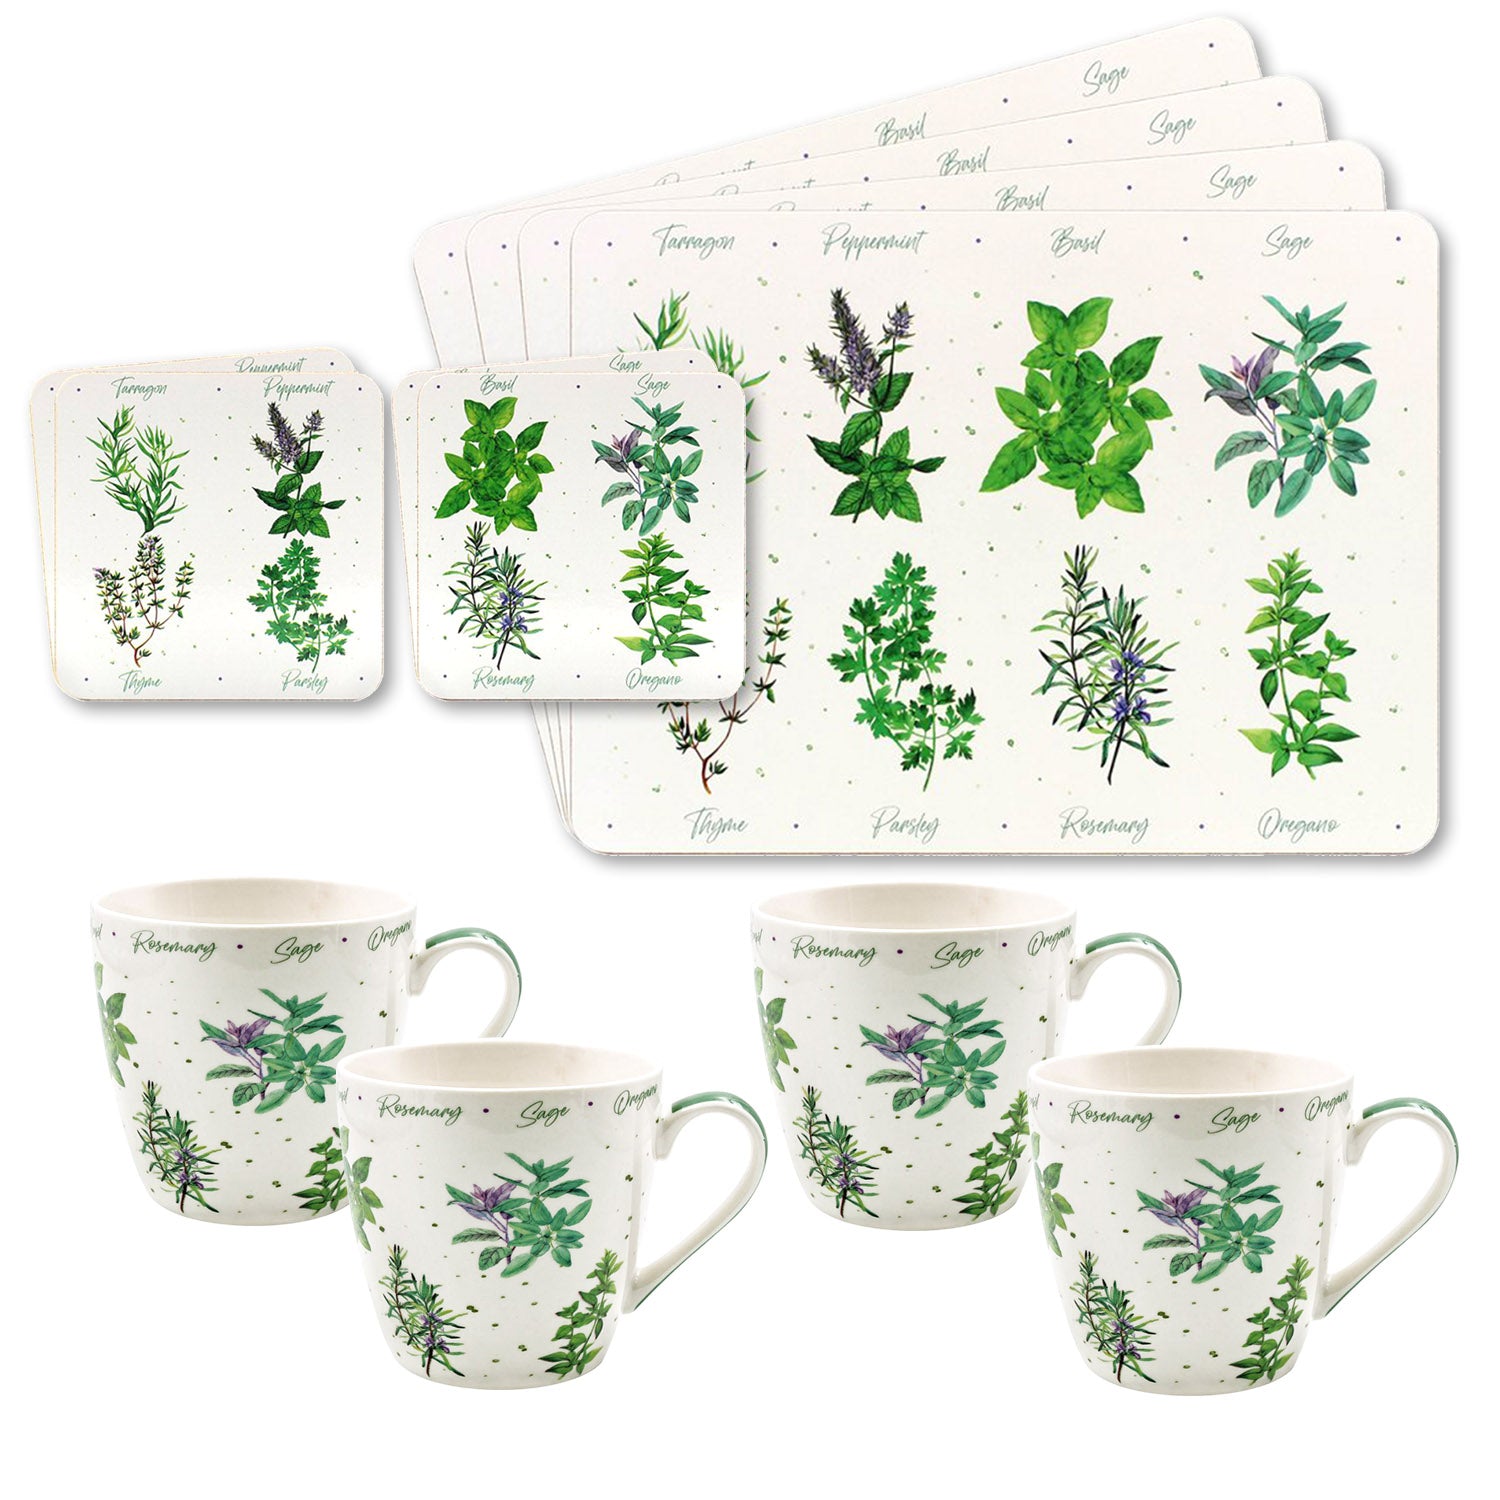 12-pc Set Green Herbs Garden Cork Coasters Placemats Breakfast Mugs x4 Leaves